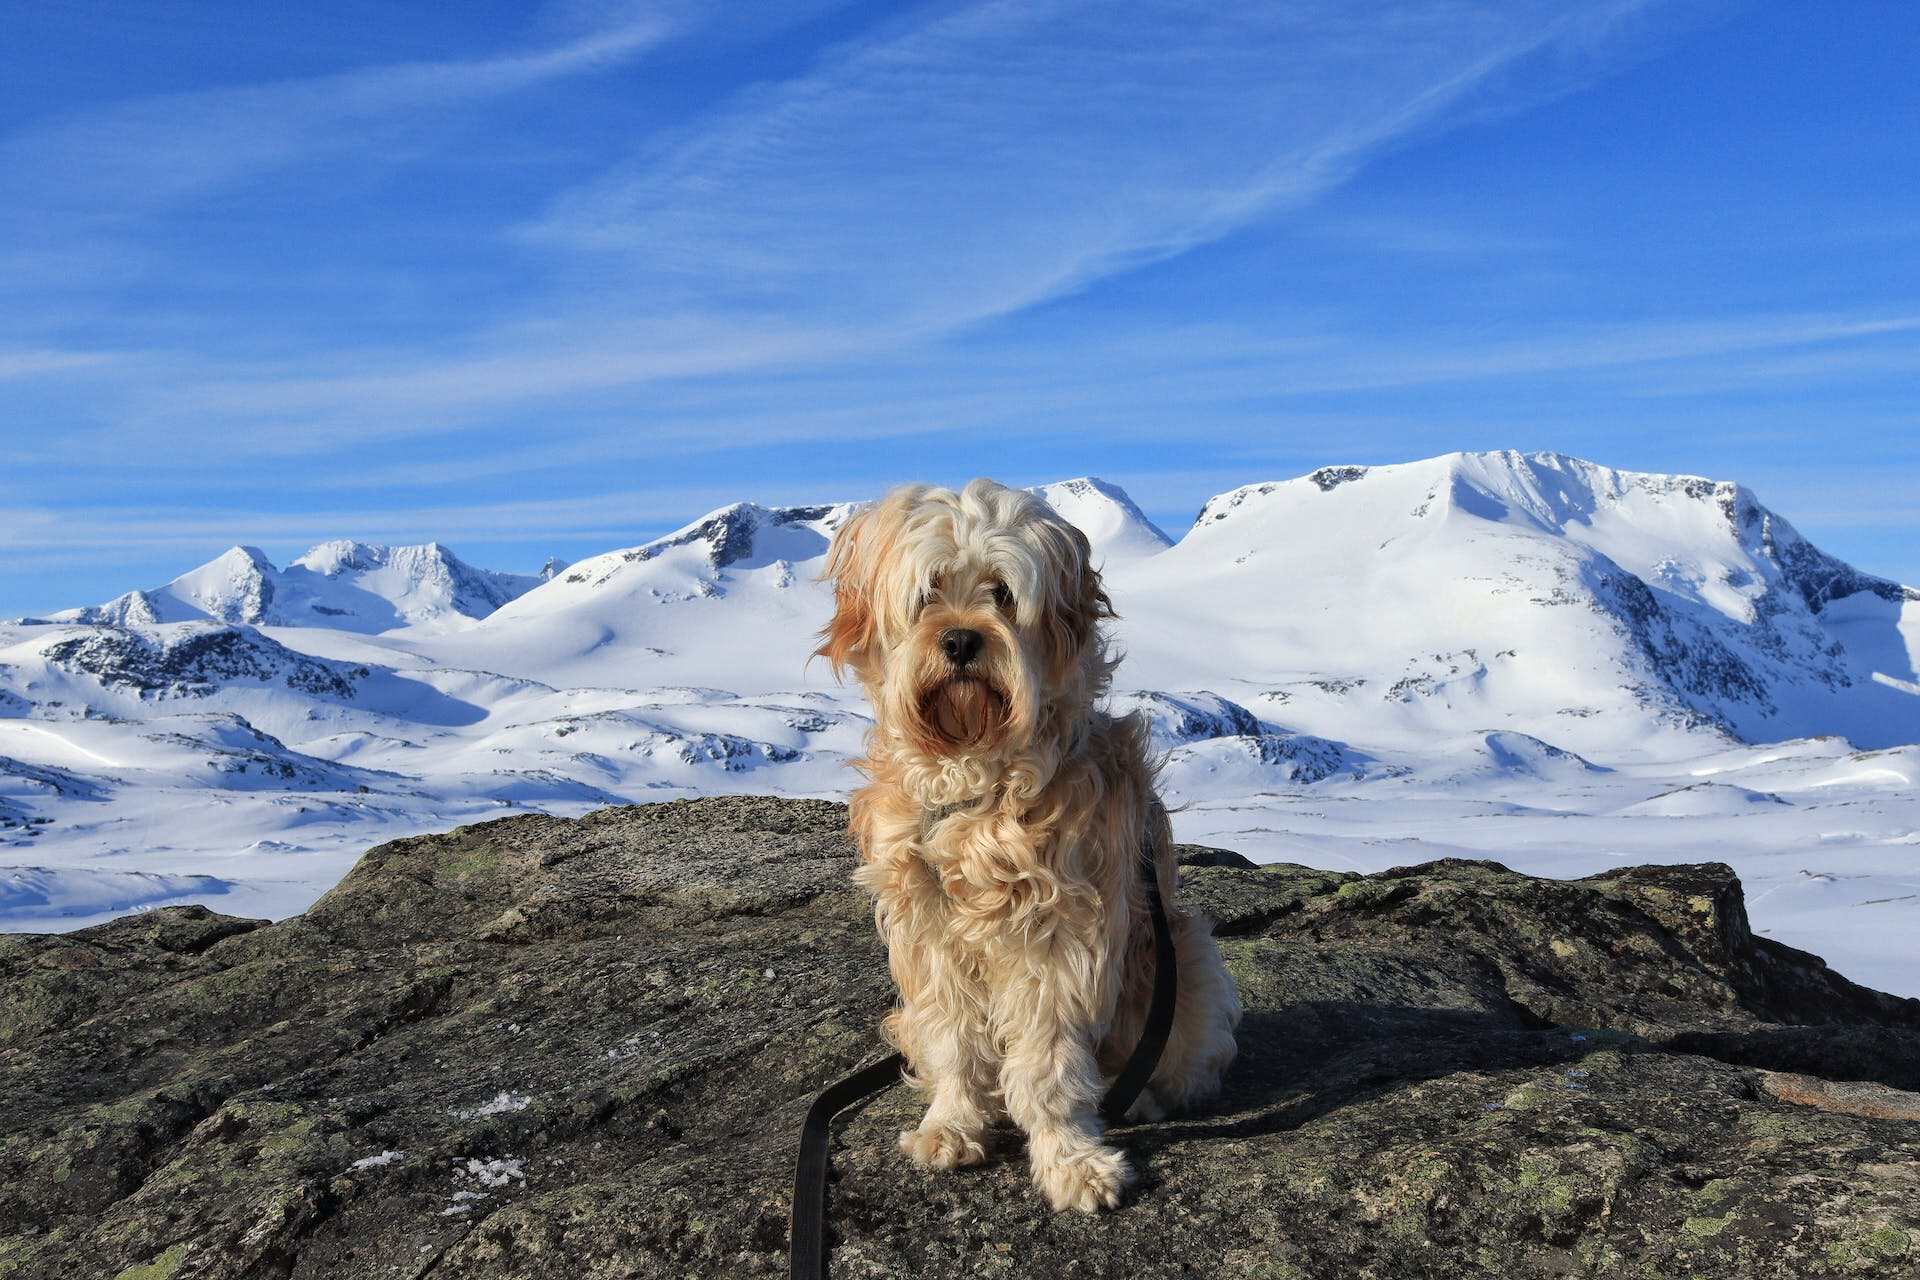 A Tibetan terrier sitting by a snowy mountain top